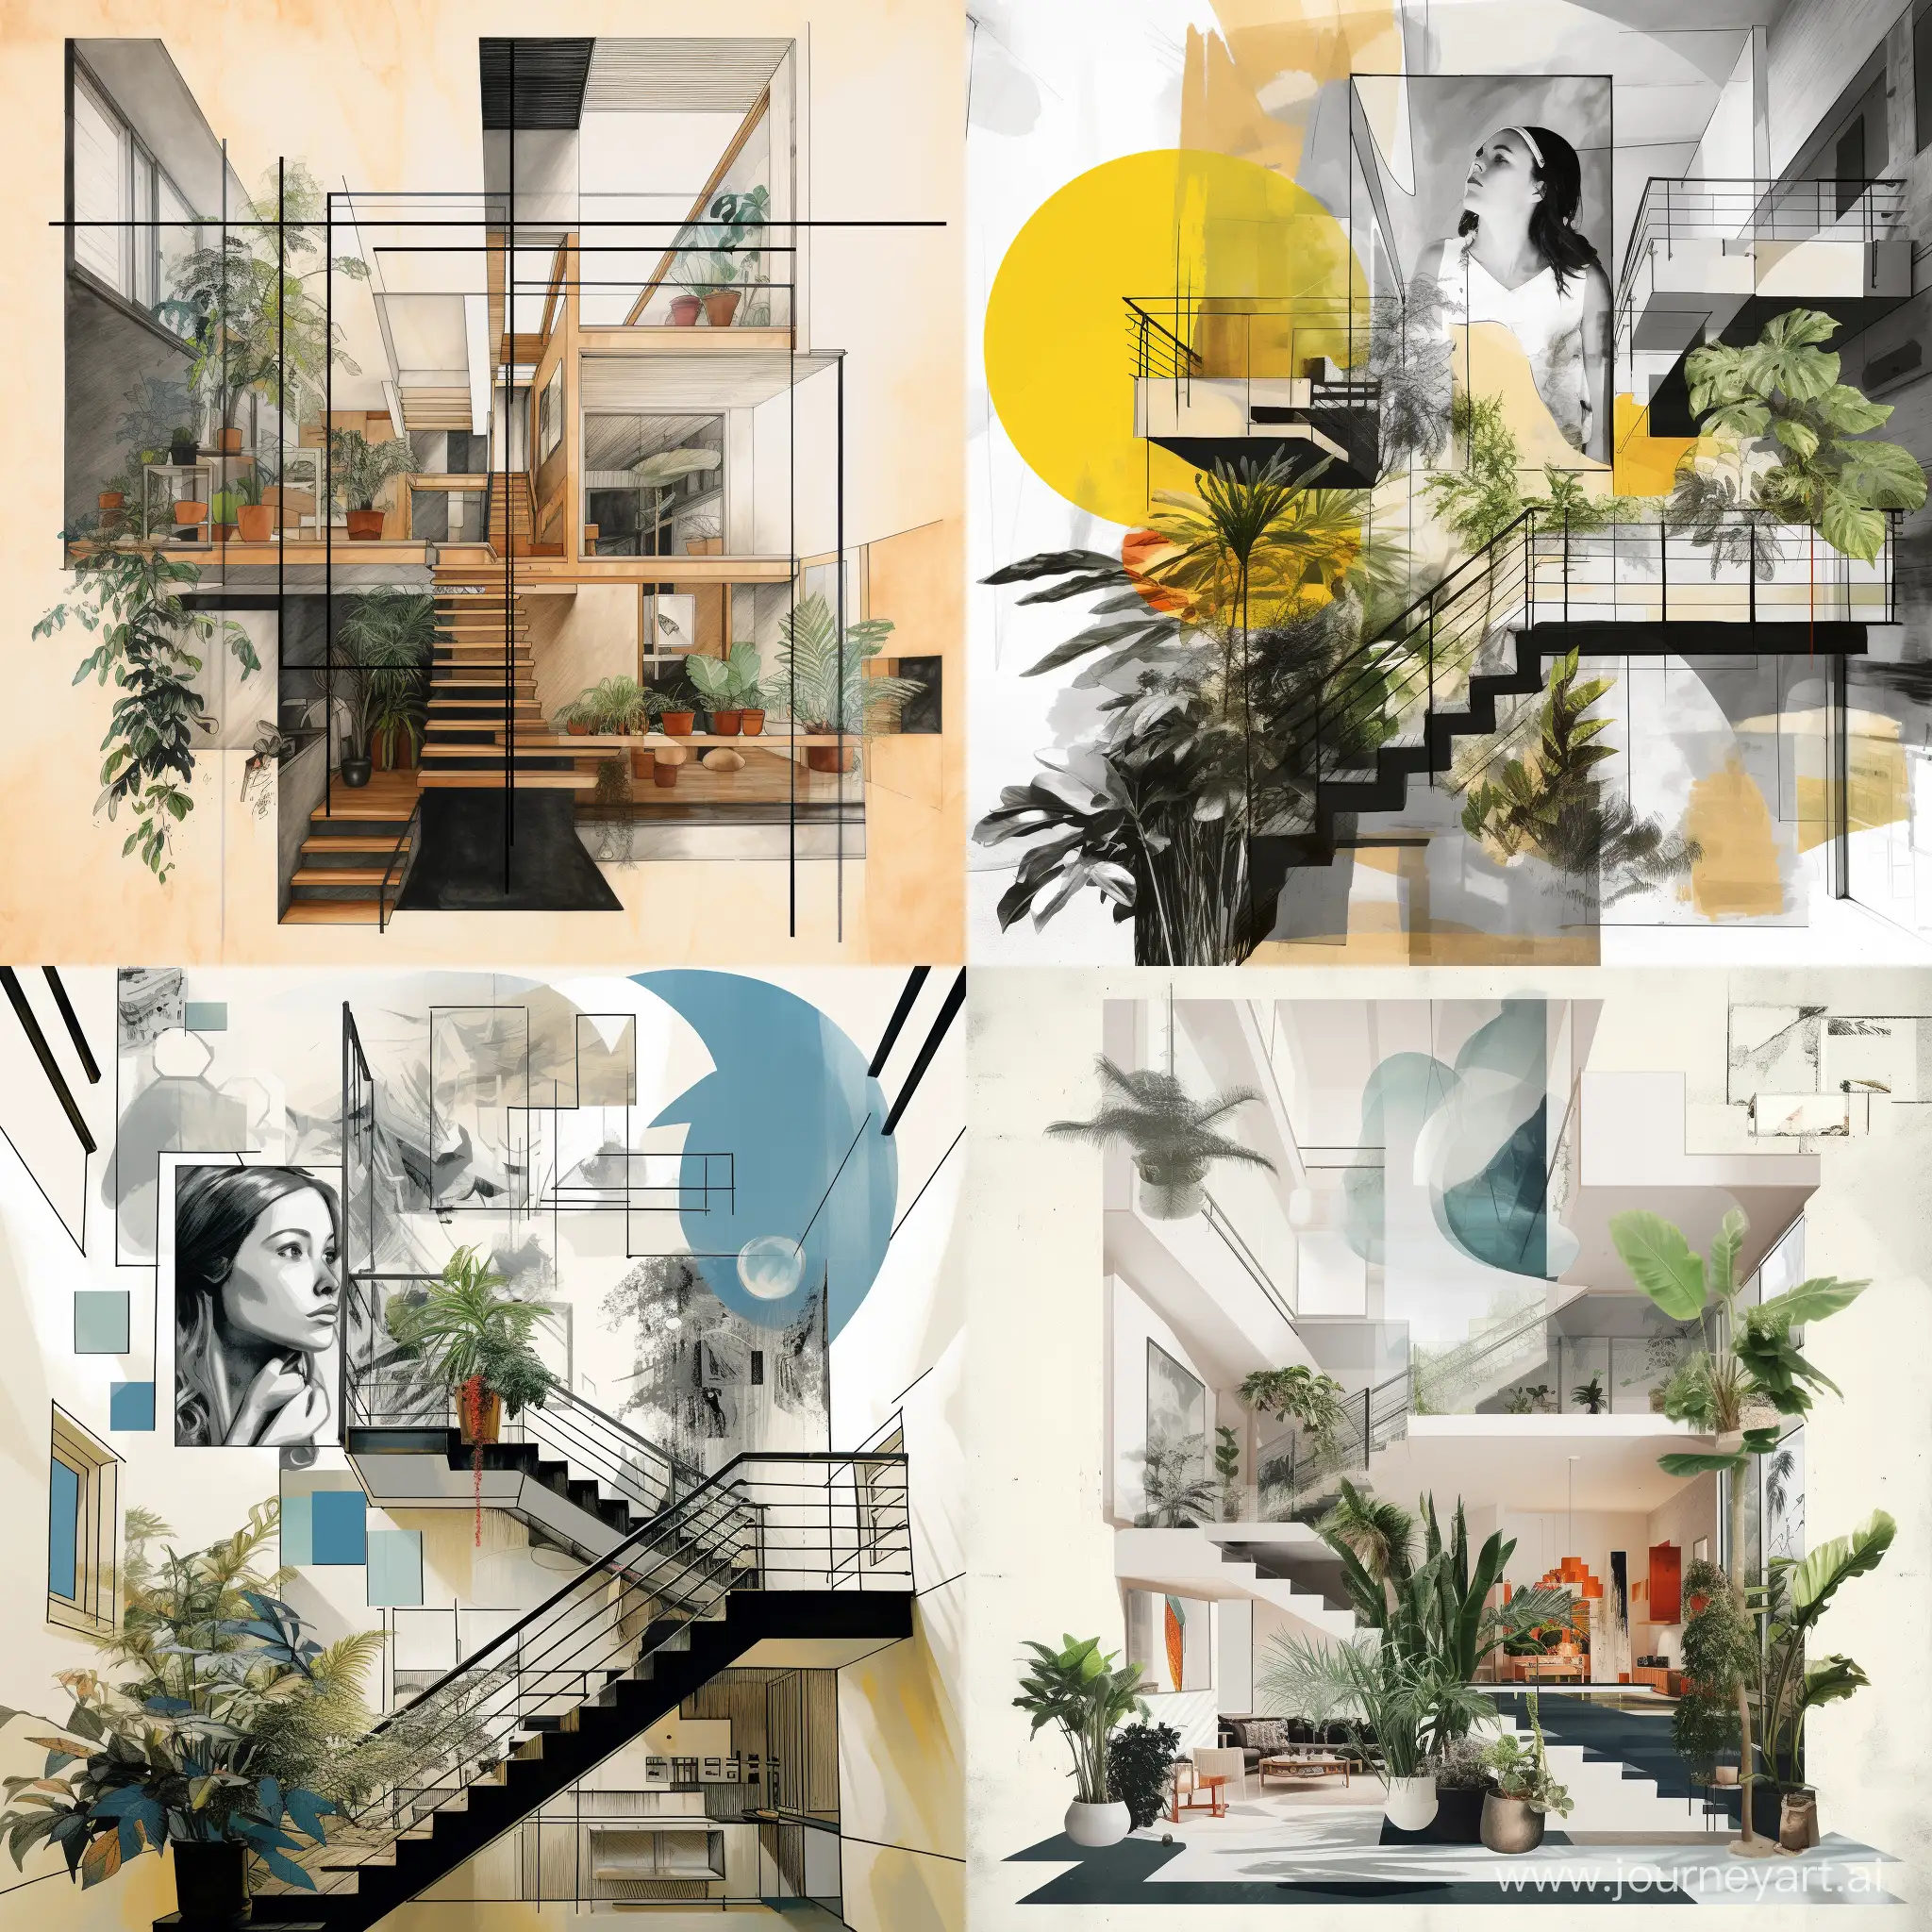 Atrium-Skylight-Design-Concept-Collage-Inspiring-Human-Creativity-Across-Four-Floors